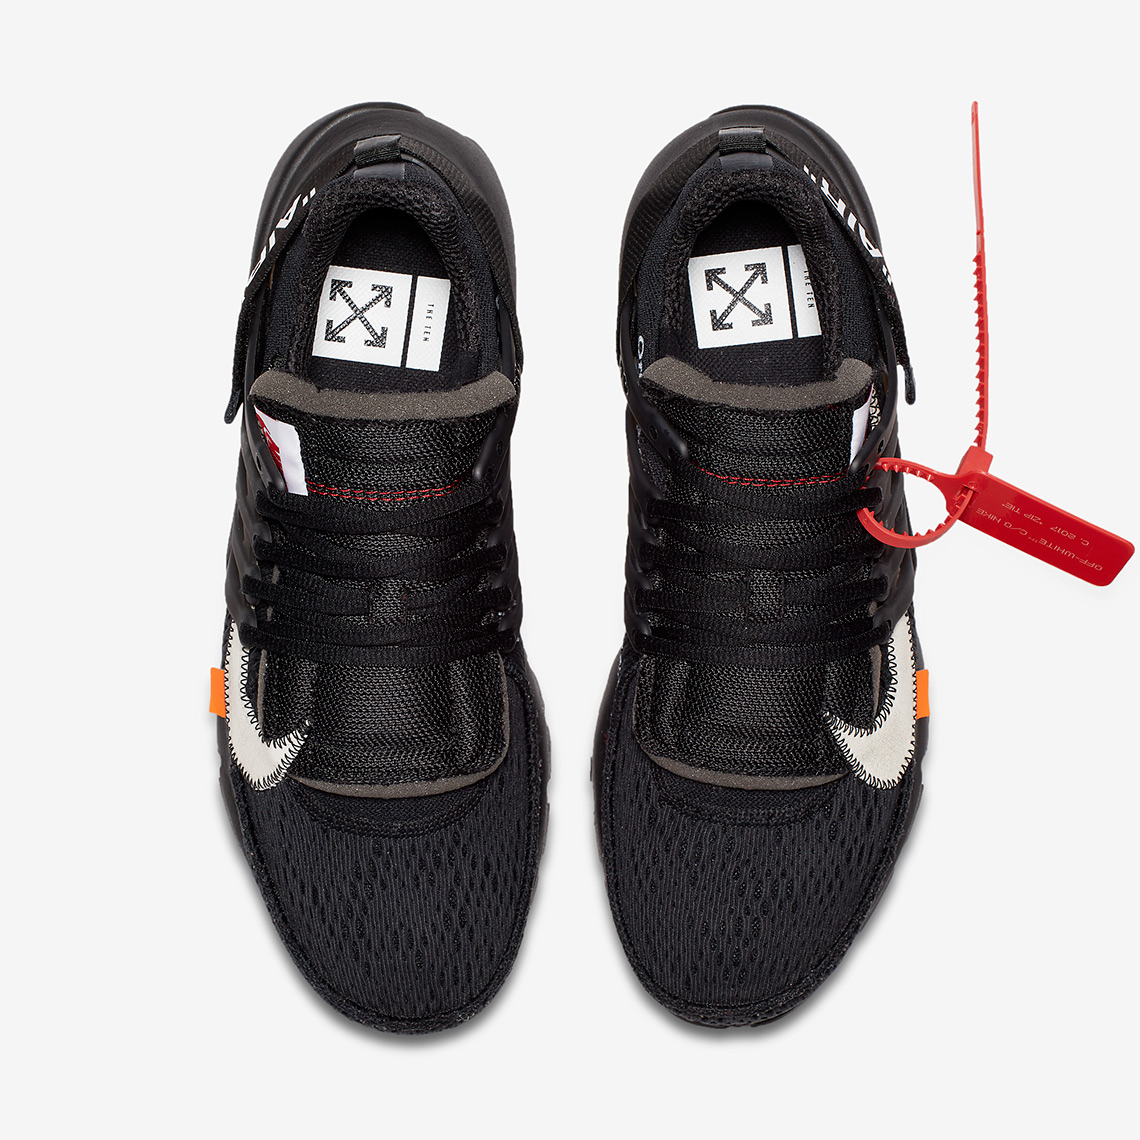 Off-White Nike Presto Official Release Info + Photos | SneakerNews.com